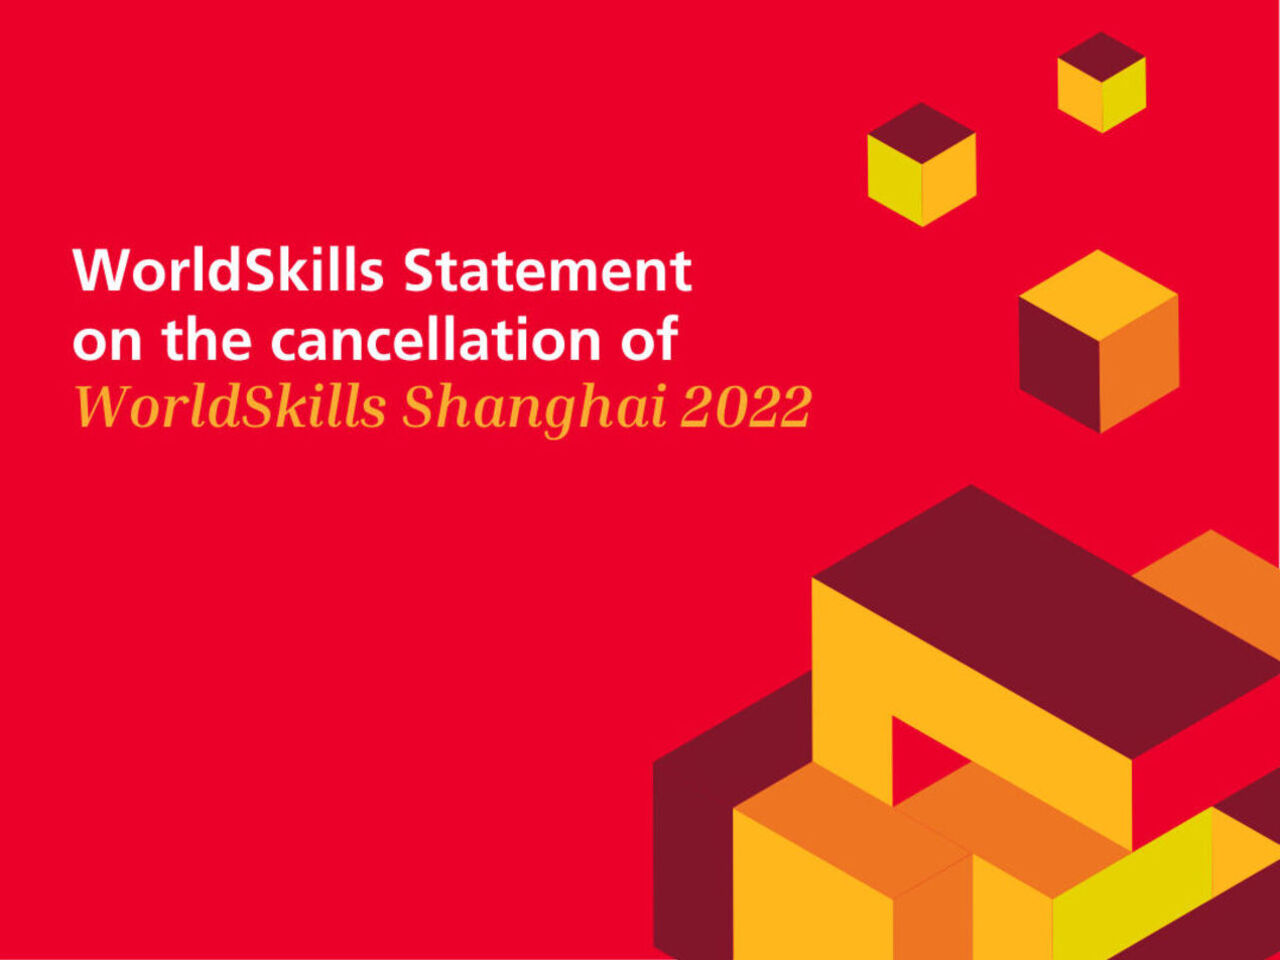 Cancellation of WorldSkills Shanghai 2022